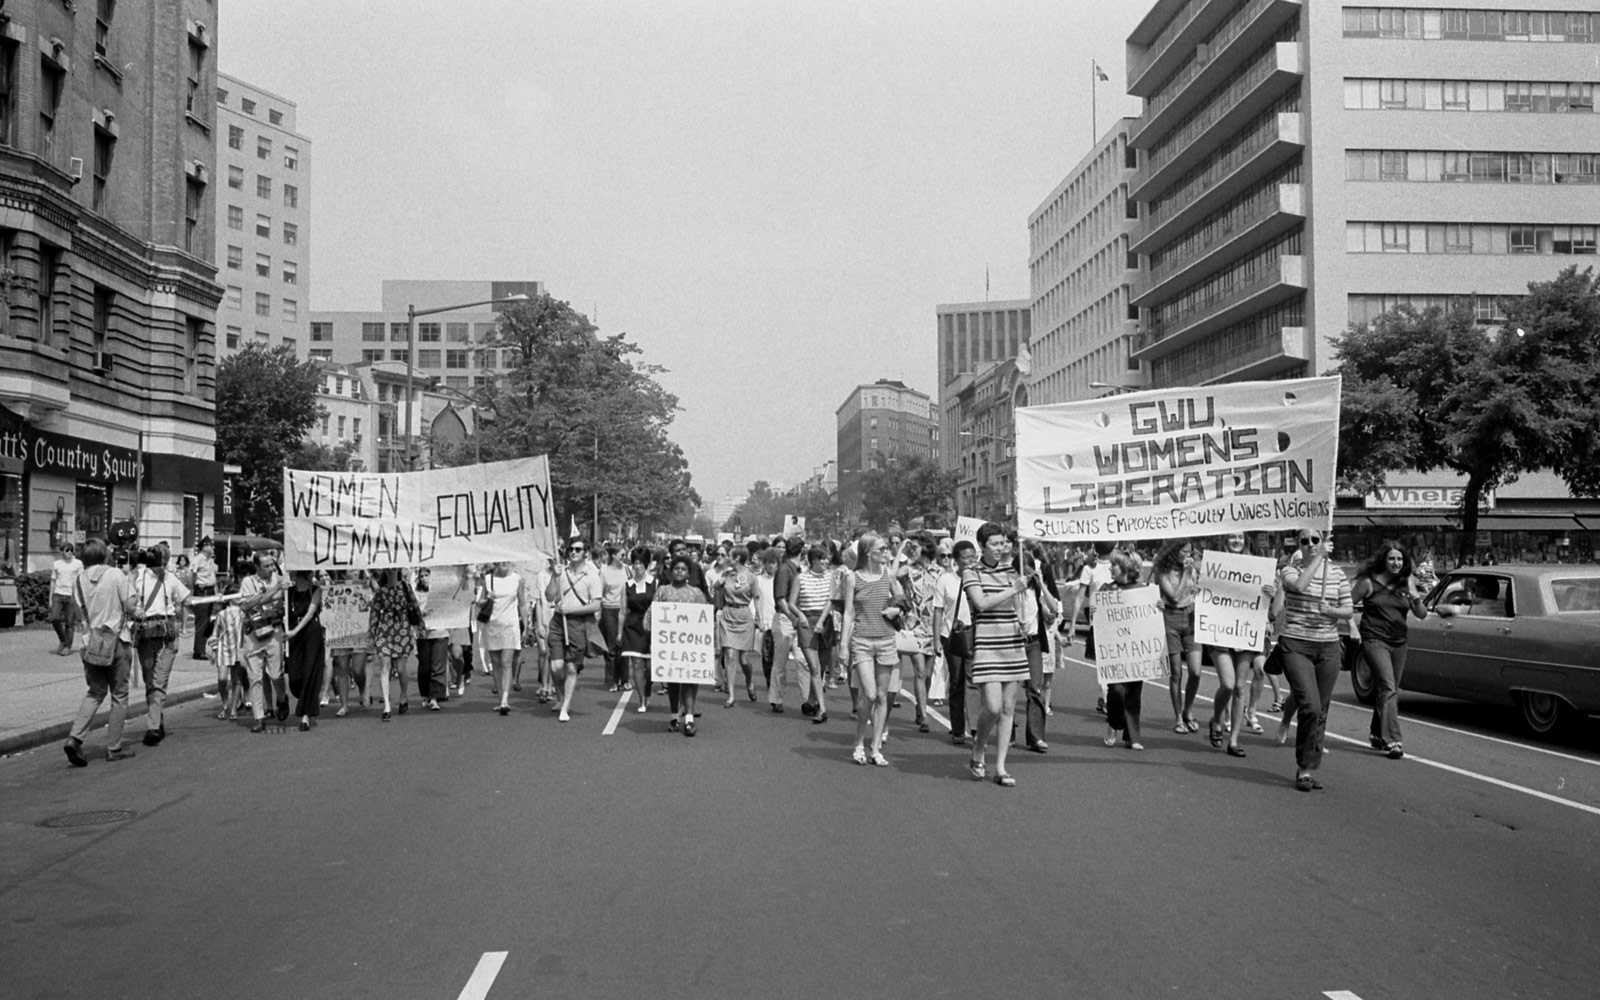 Women's liberation march at Washington, 1970.